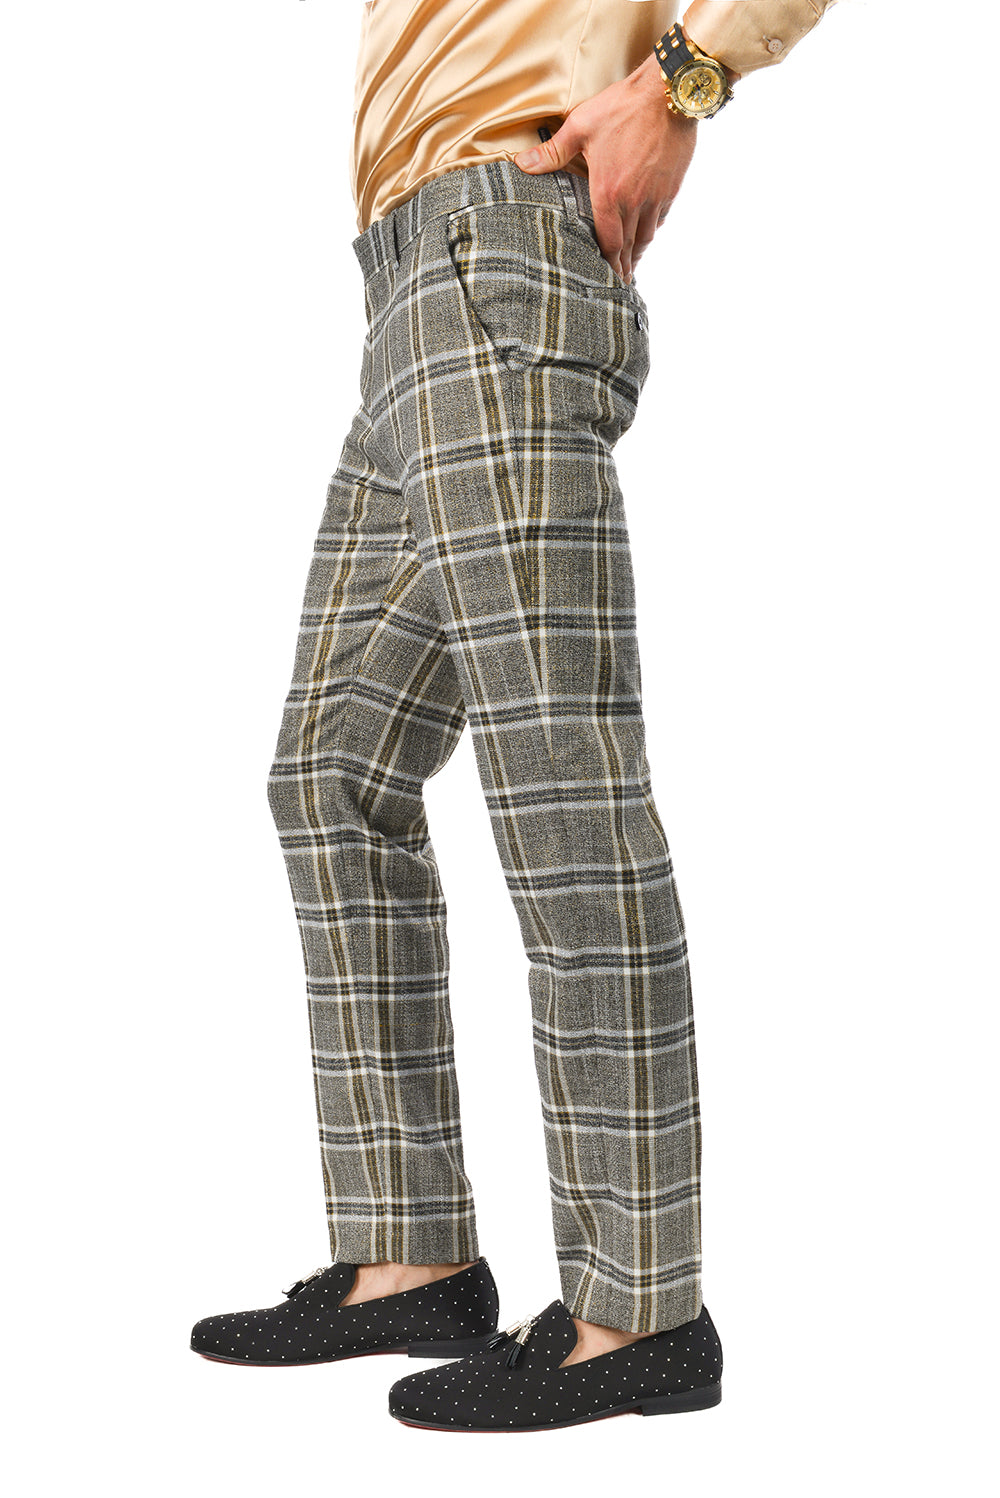 Barabas Men's Printed Checkered  Plaid Design Chino Pants  2CP187 Grey Gold